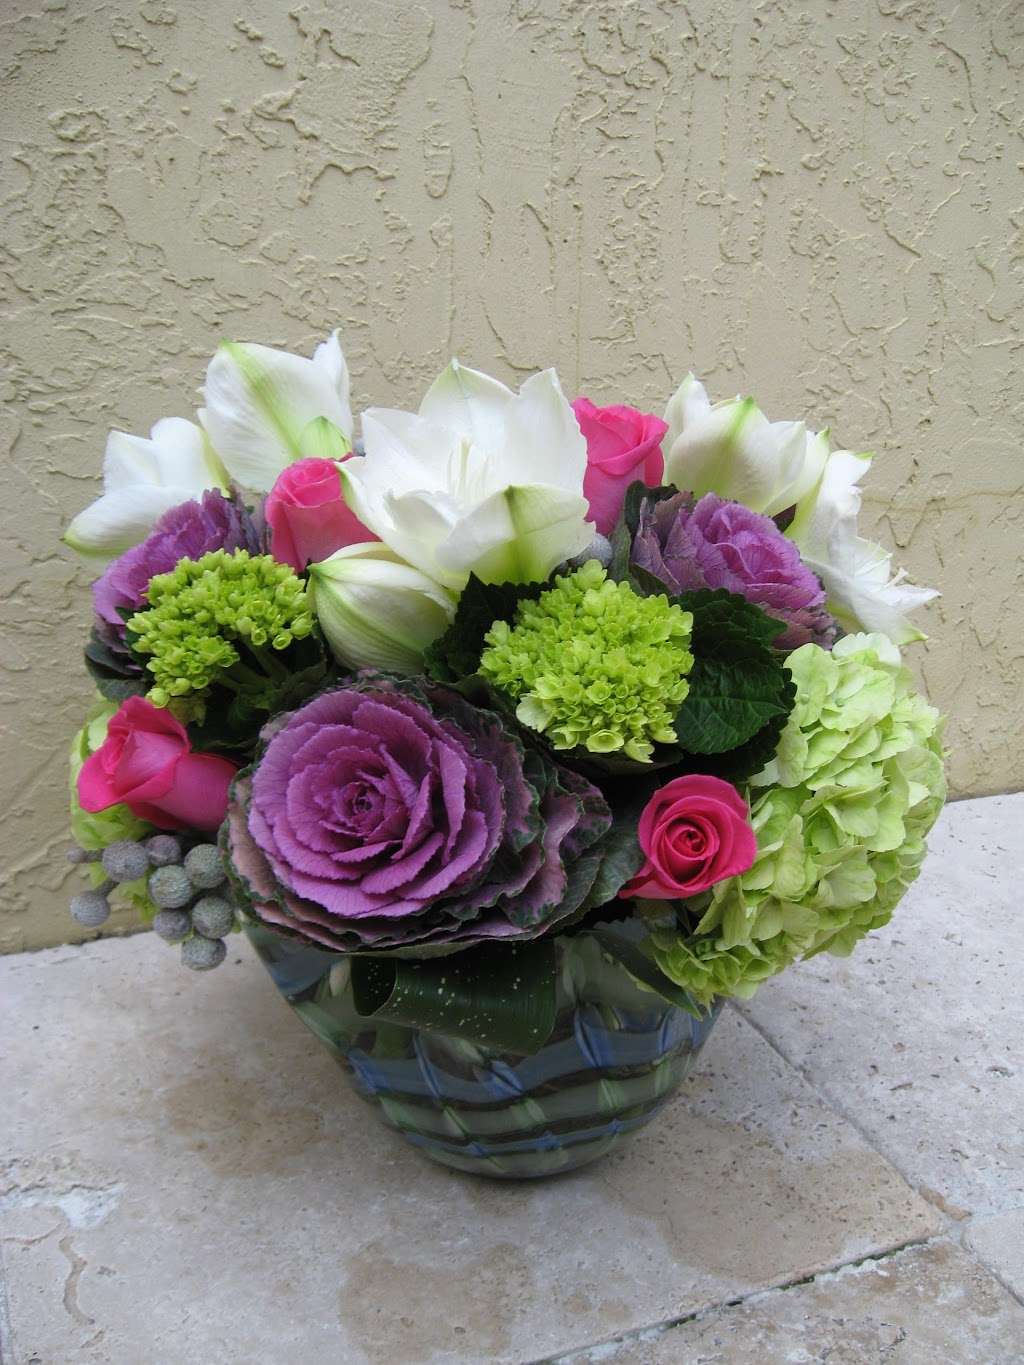 Tamaras Flower Garden | 851 SE 6th Ave #107, Delray Beach, FL 33483, USA | Phone: (561) 243-0224